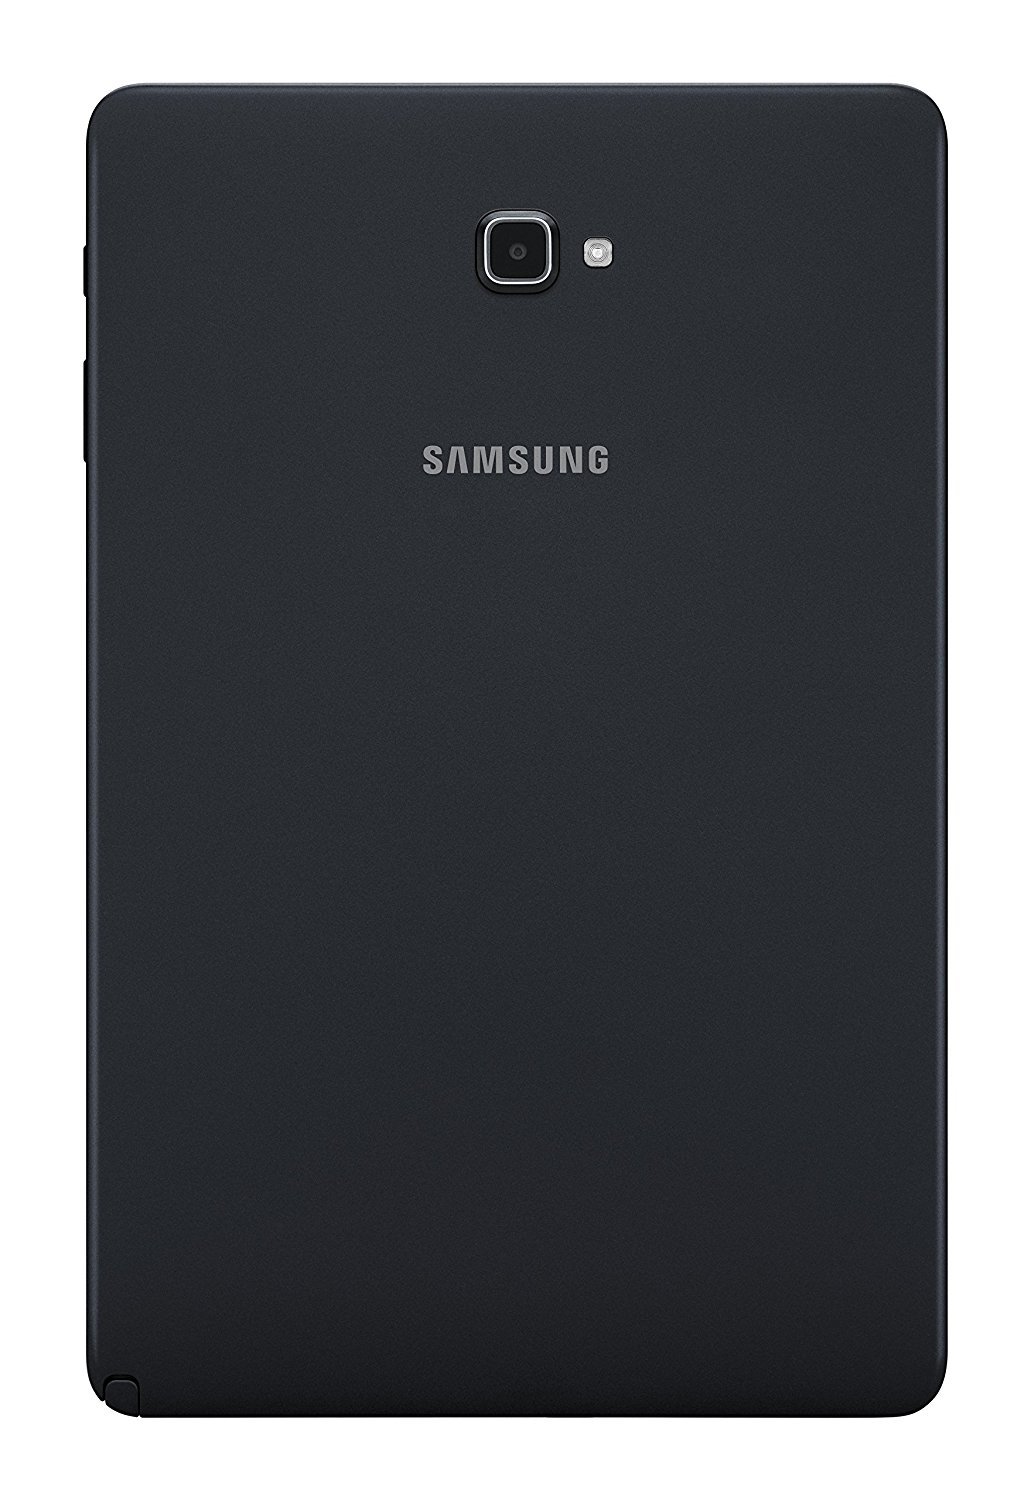 Samsung Galaxy Tab A SM-T580 10.1-Inch Touchscreen 16 GB Tablet (2 GB Ram, Wi-Fi, Android OS, Black) Bundle with 32GB microSD Card